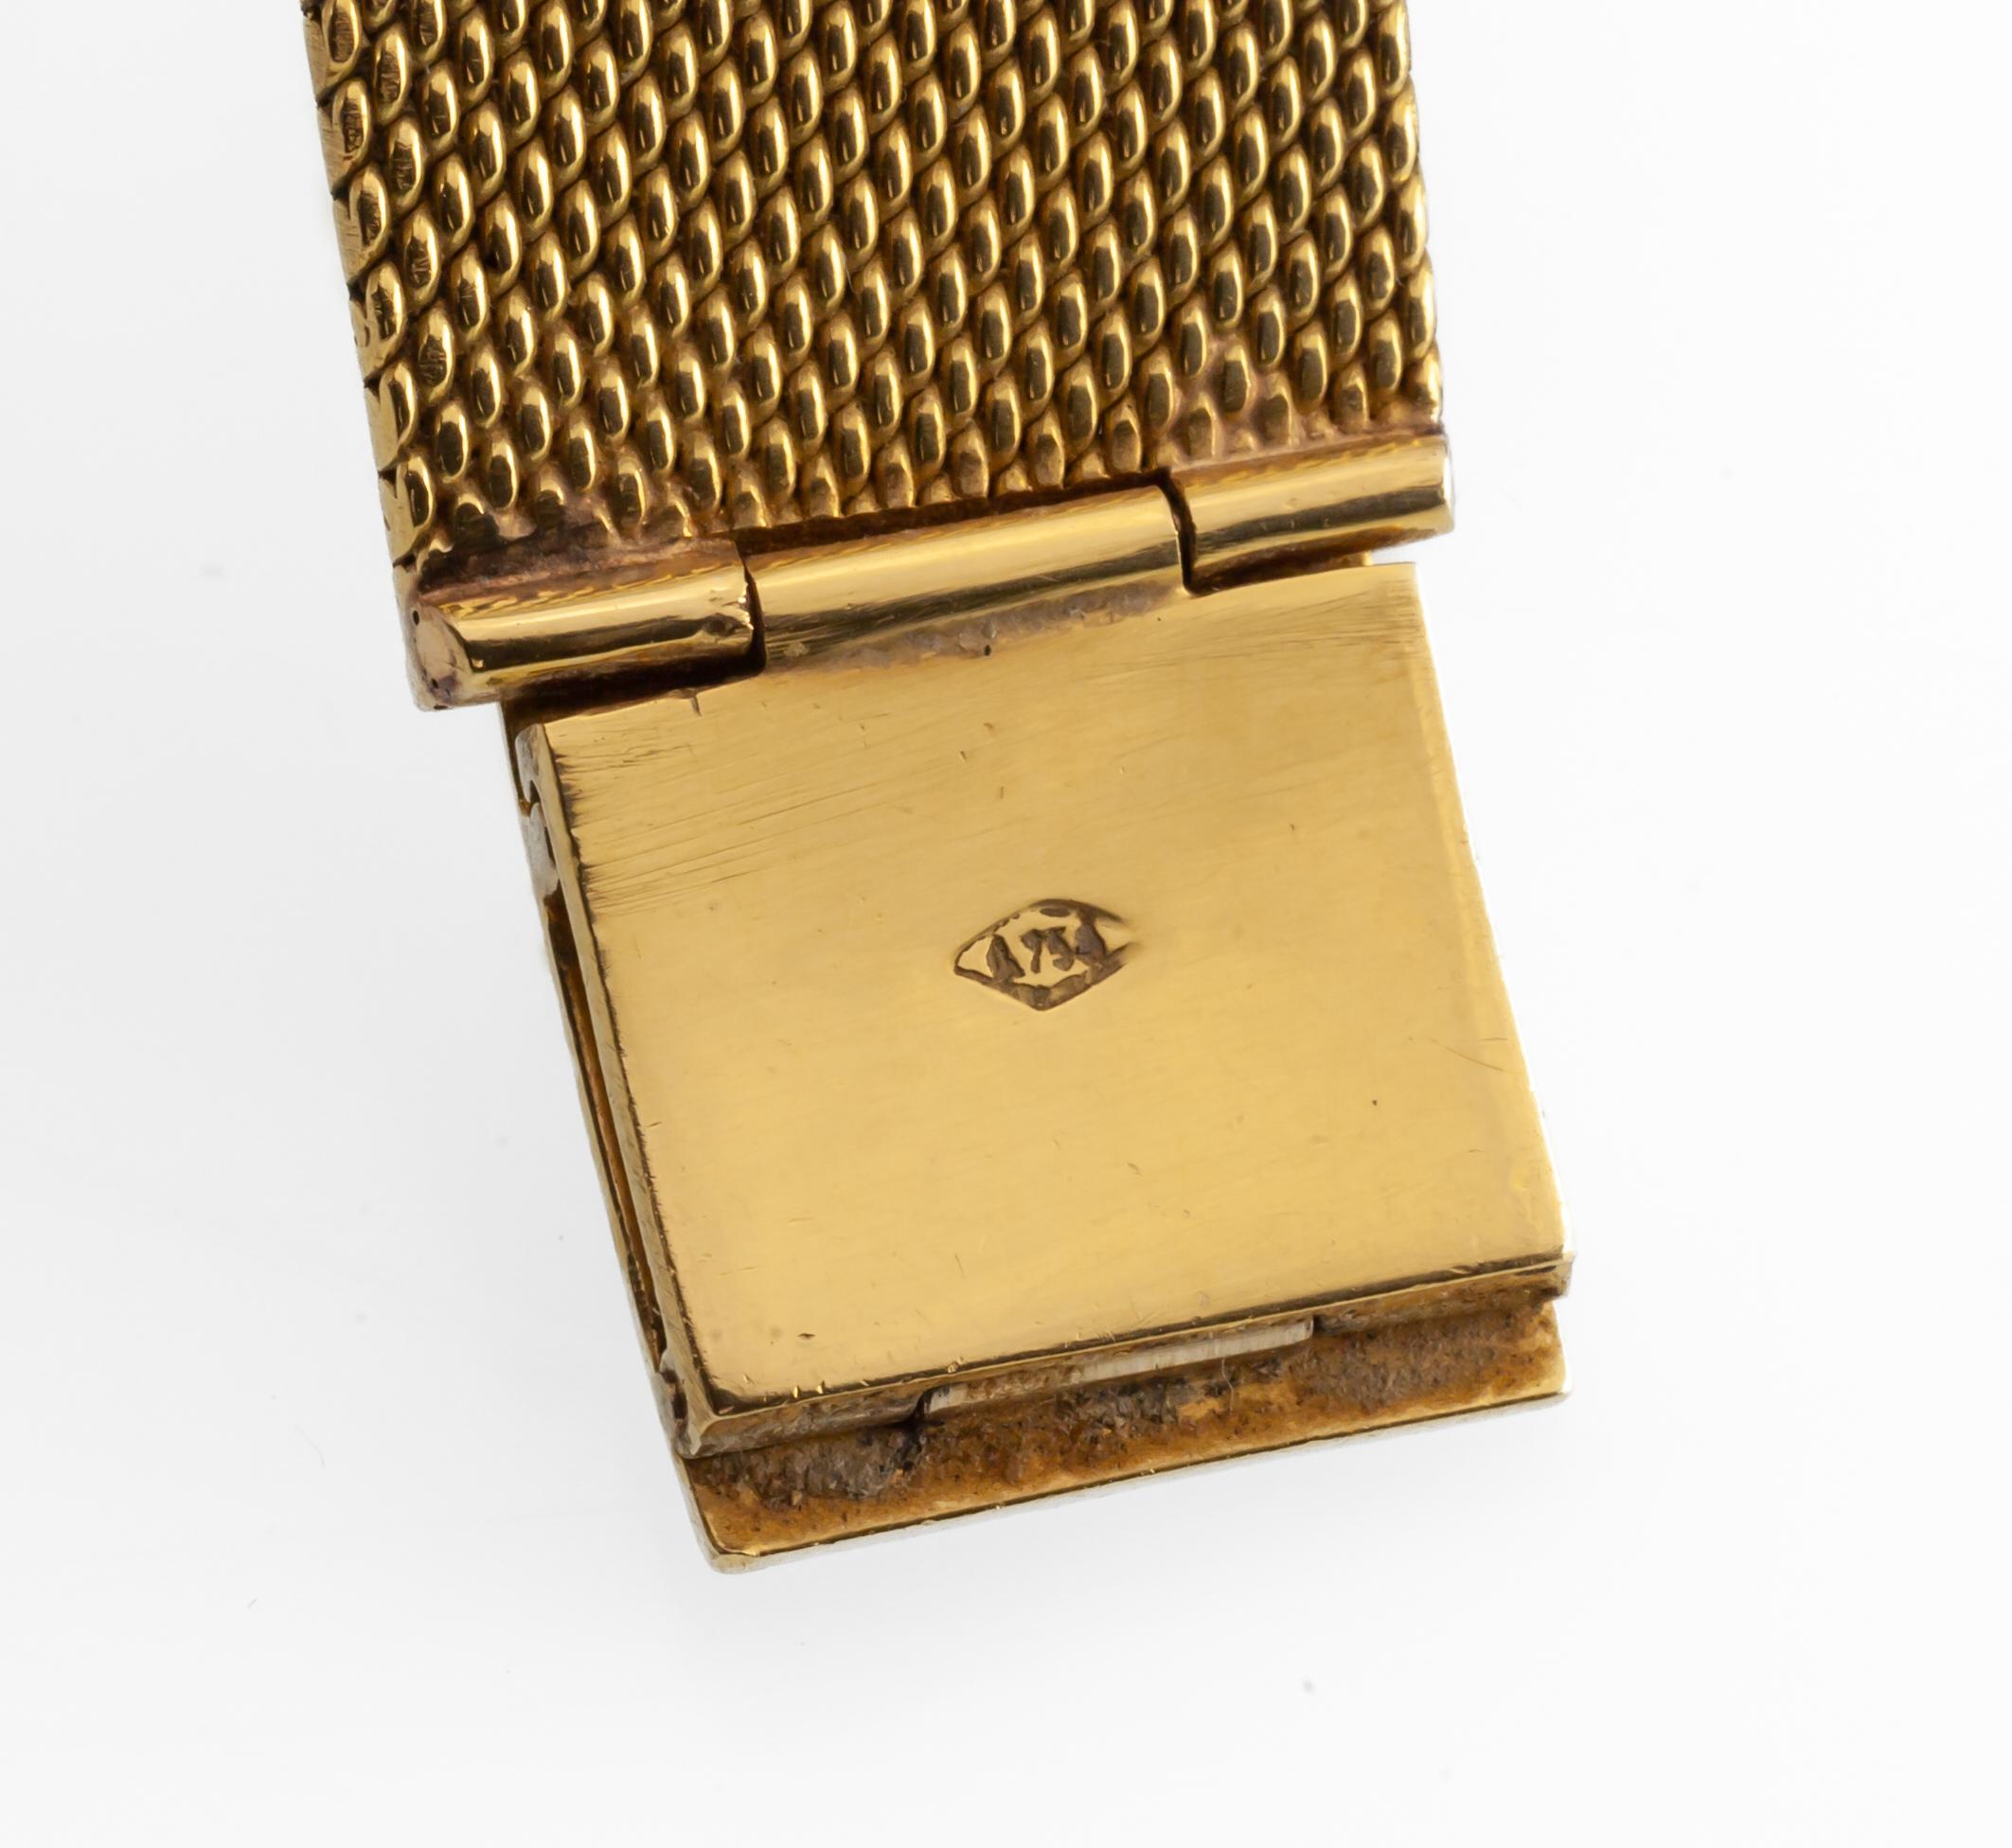 Vacheron Constantin Men's 18k Gold Mechanical Watch with Original Mesh Band For Sale 1